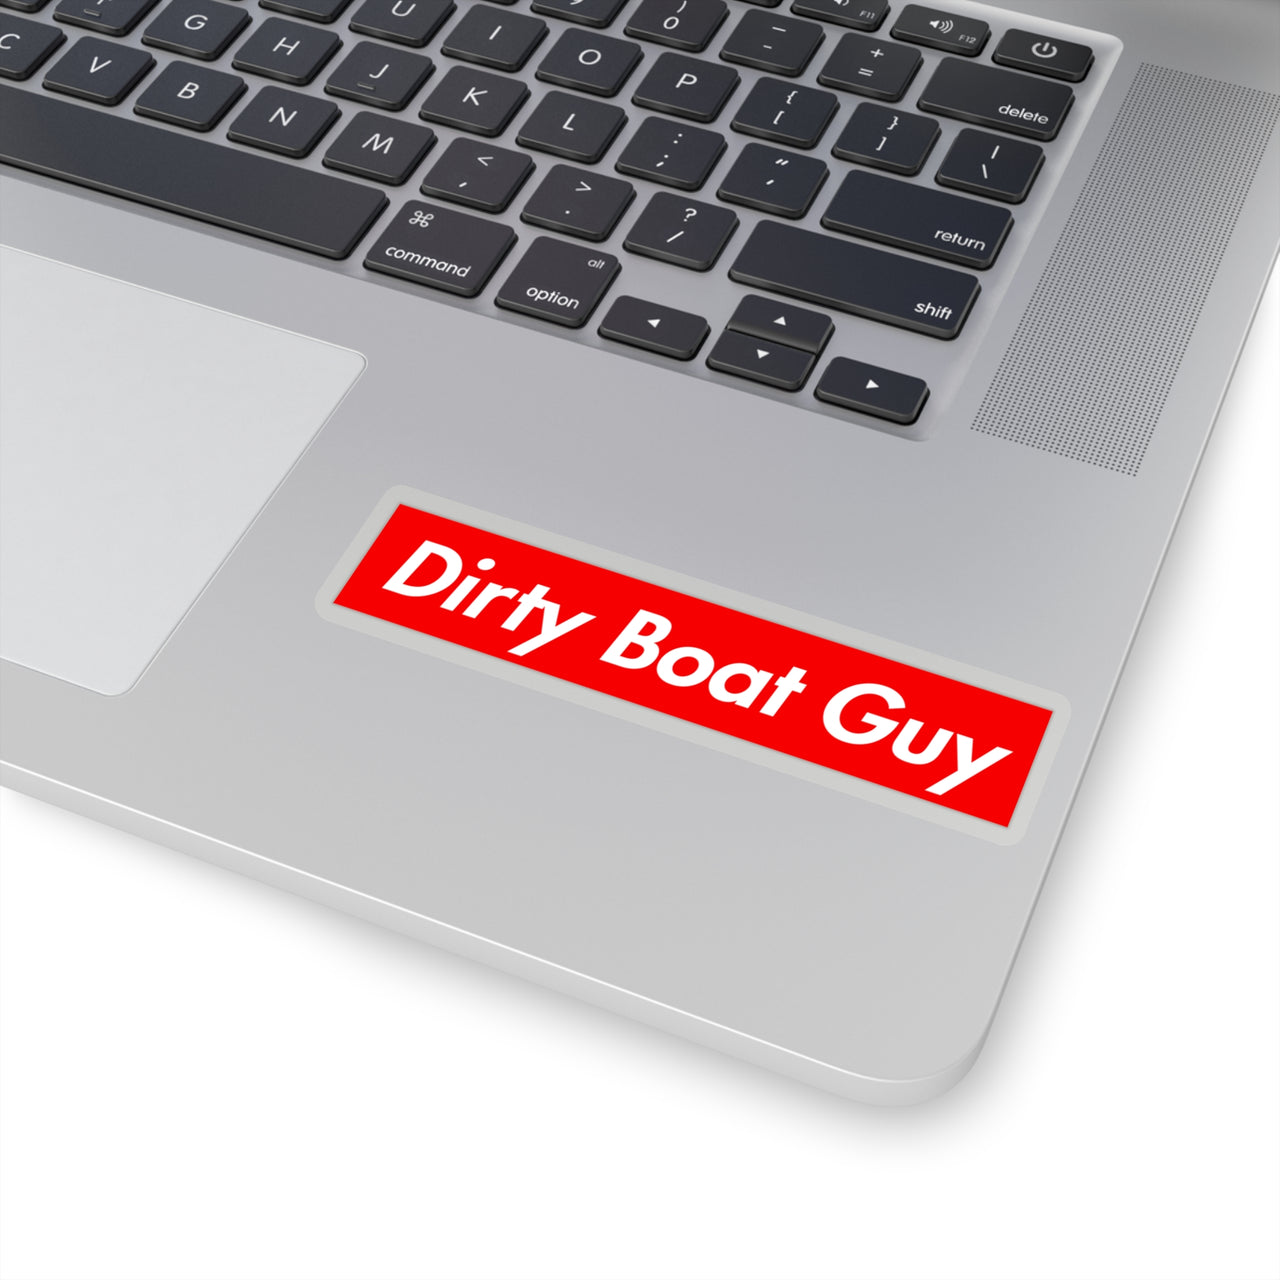 DBG - Dirty Boat Guy Sticker